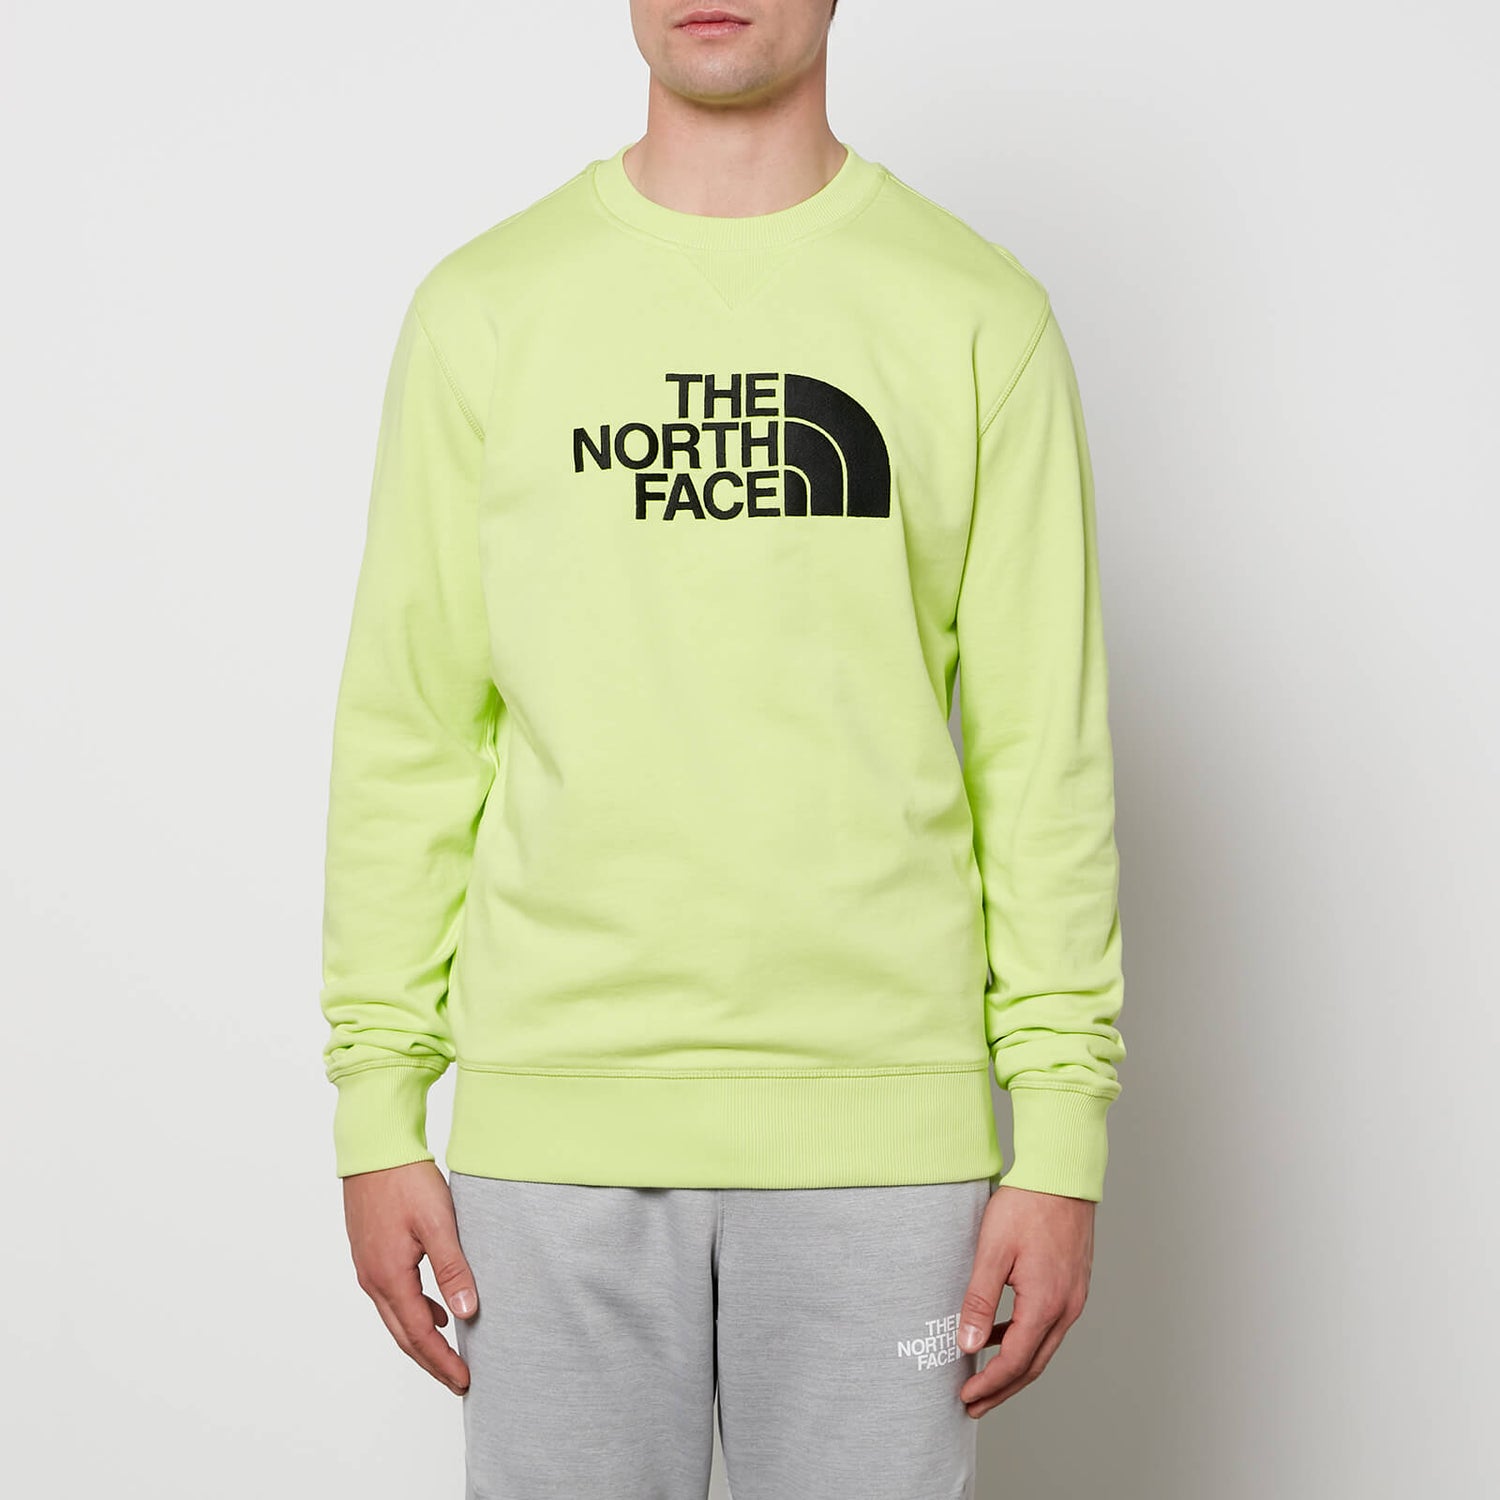 The North Face Men's Drew Peak Light Crew Sweatshirt - Sharp Green - S